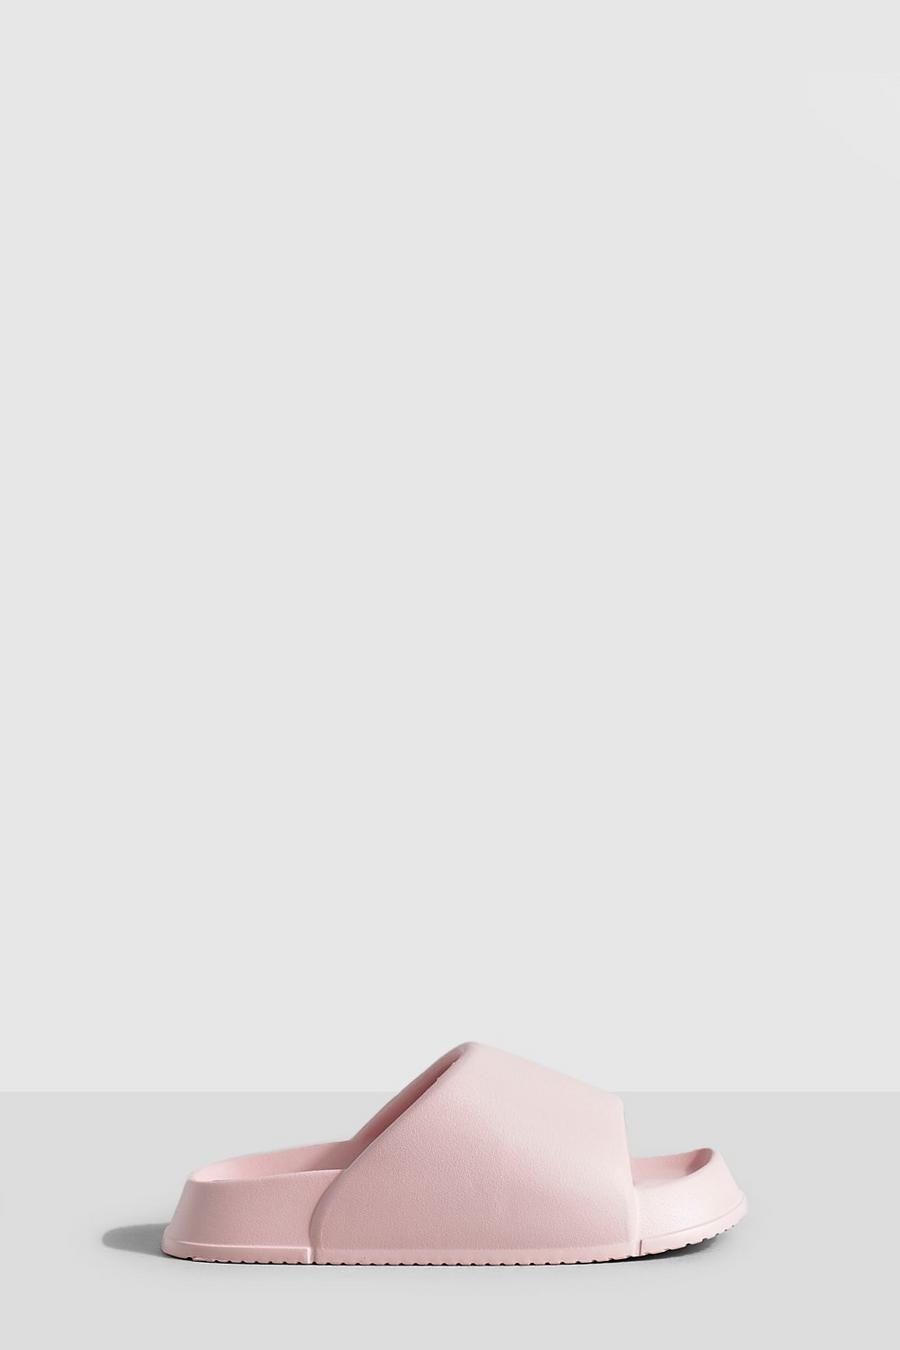 Sandalias gruesas con puntera cuadrada, Baby pink image number 1